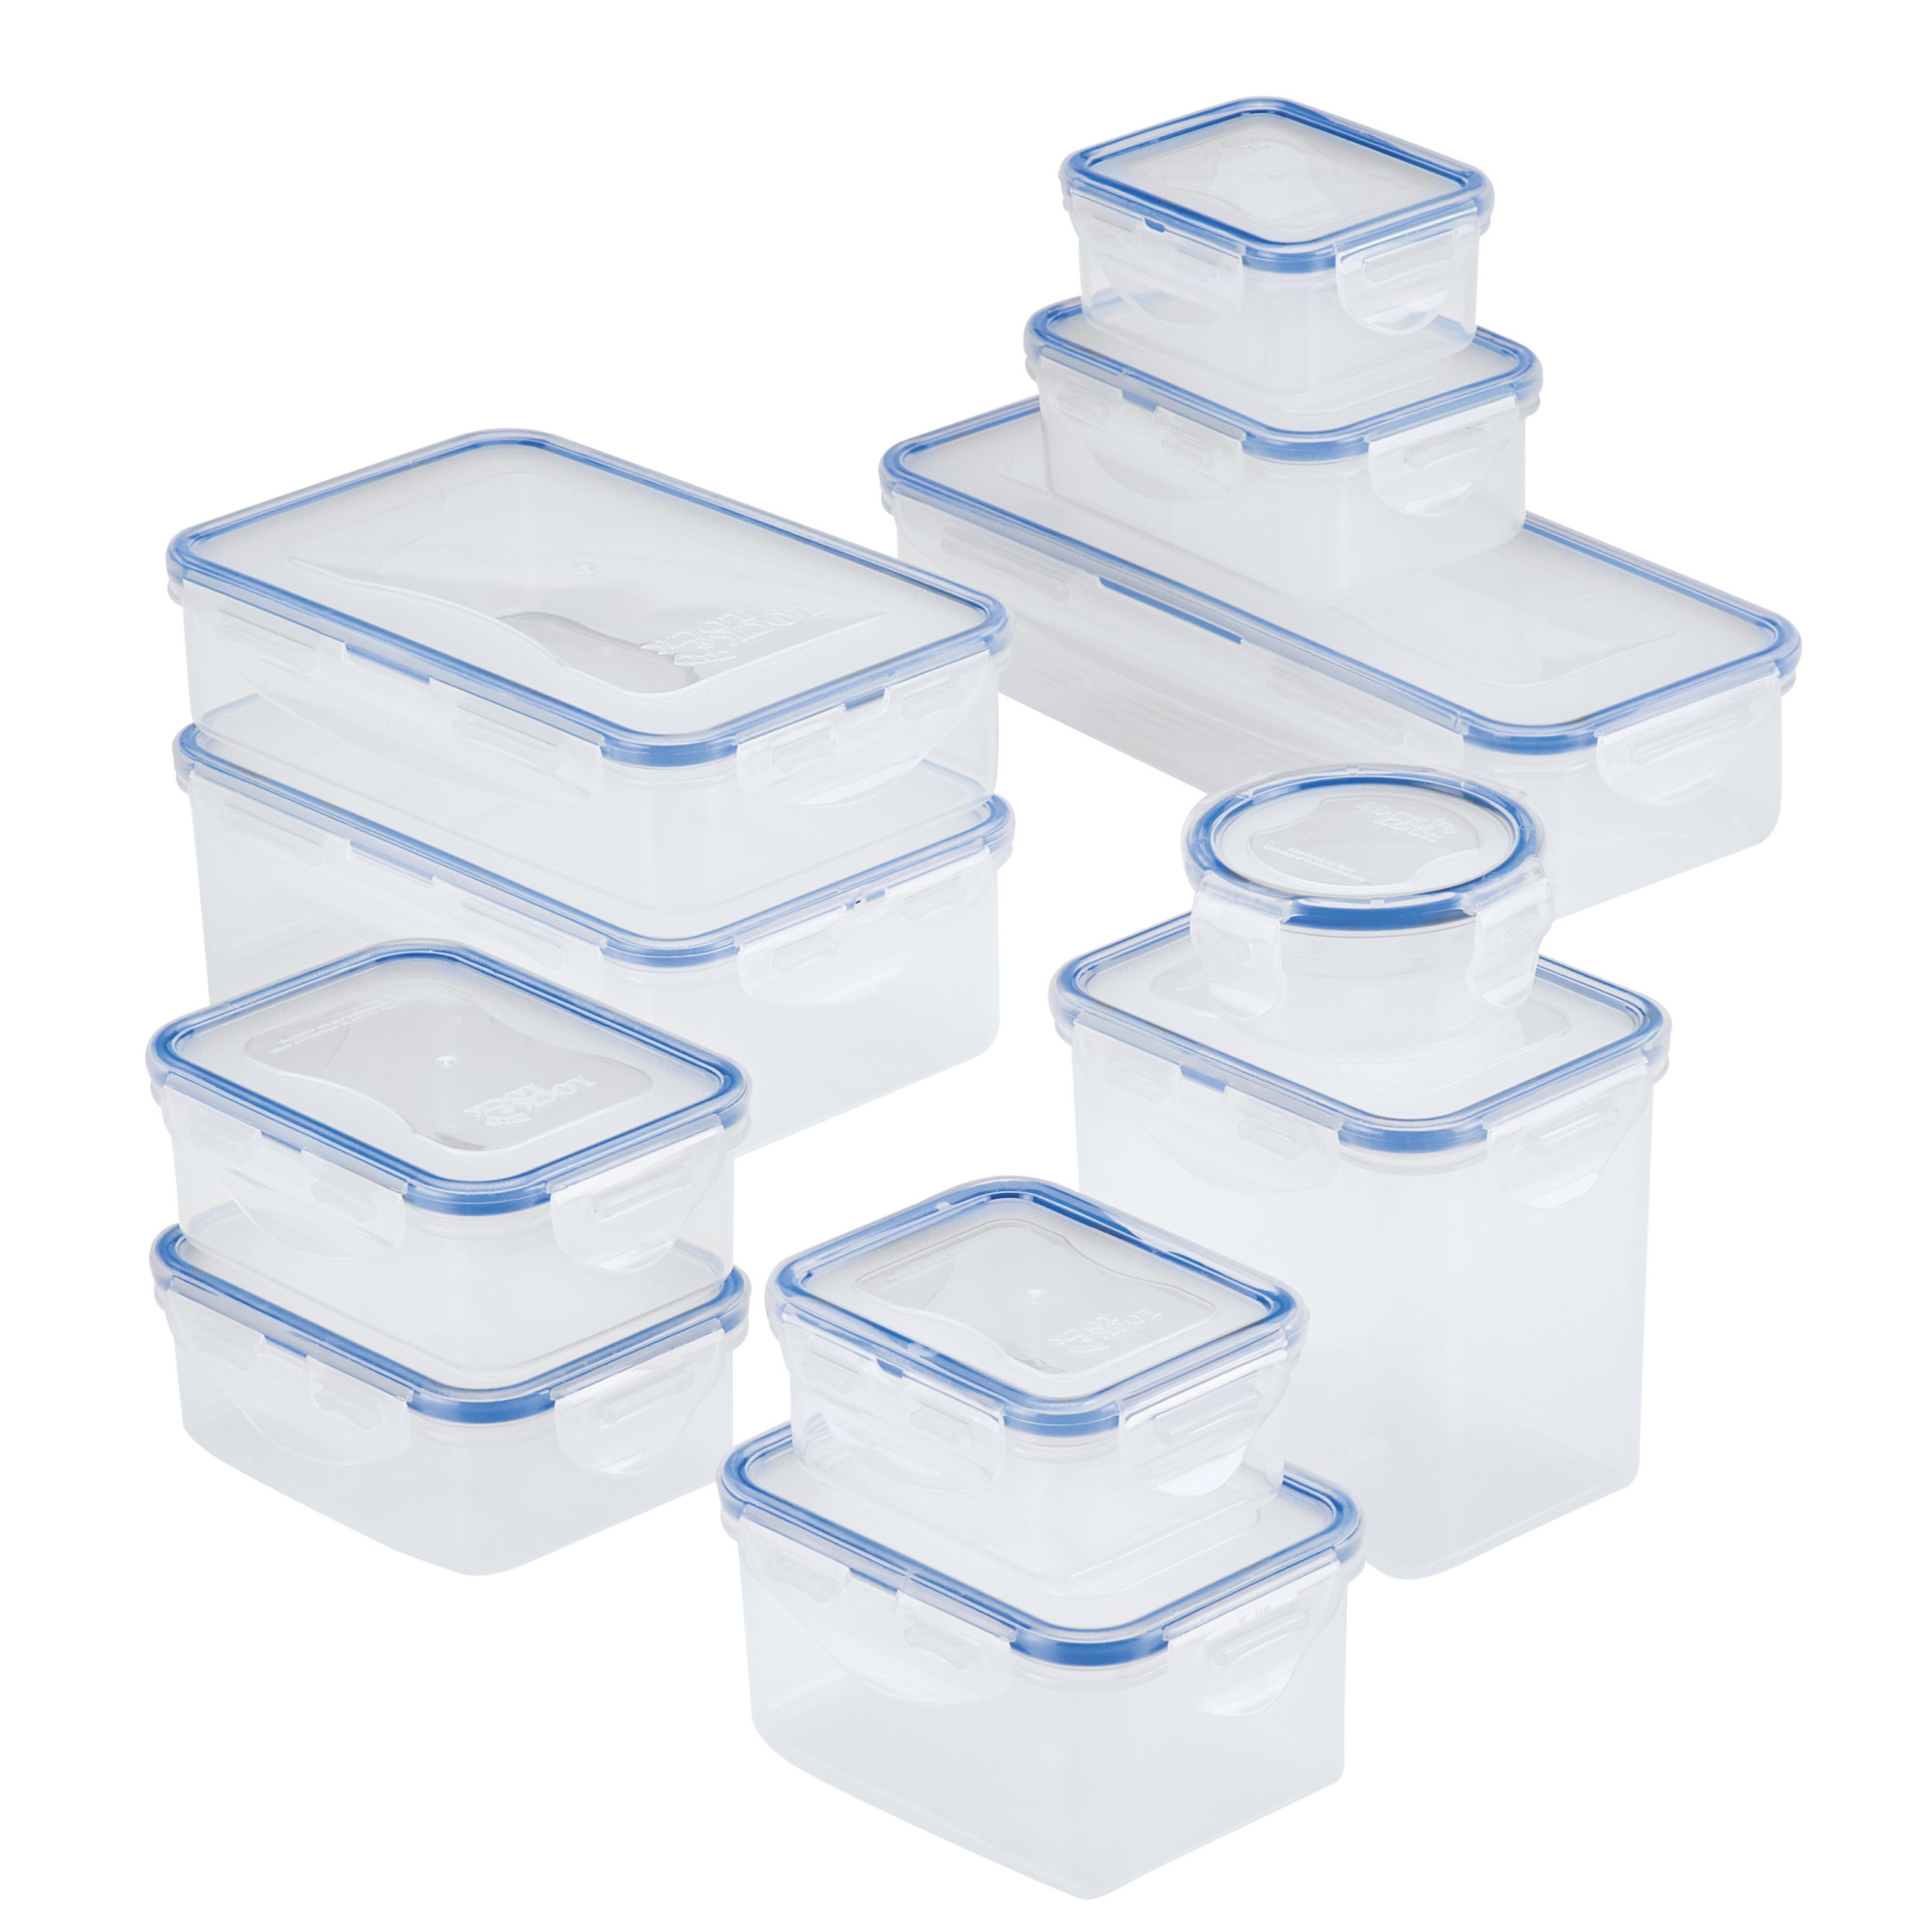 Lock & Lock 22-Piece Variety Easy Essentials Food Storage Container Set, Leak-Proof - image 1 of 8